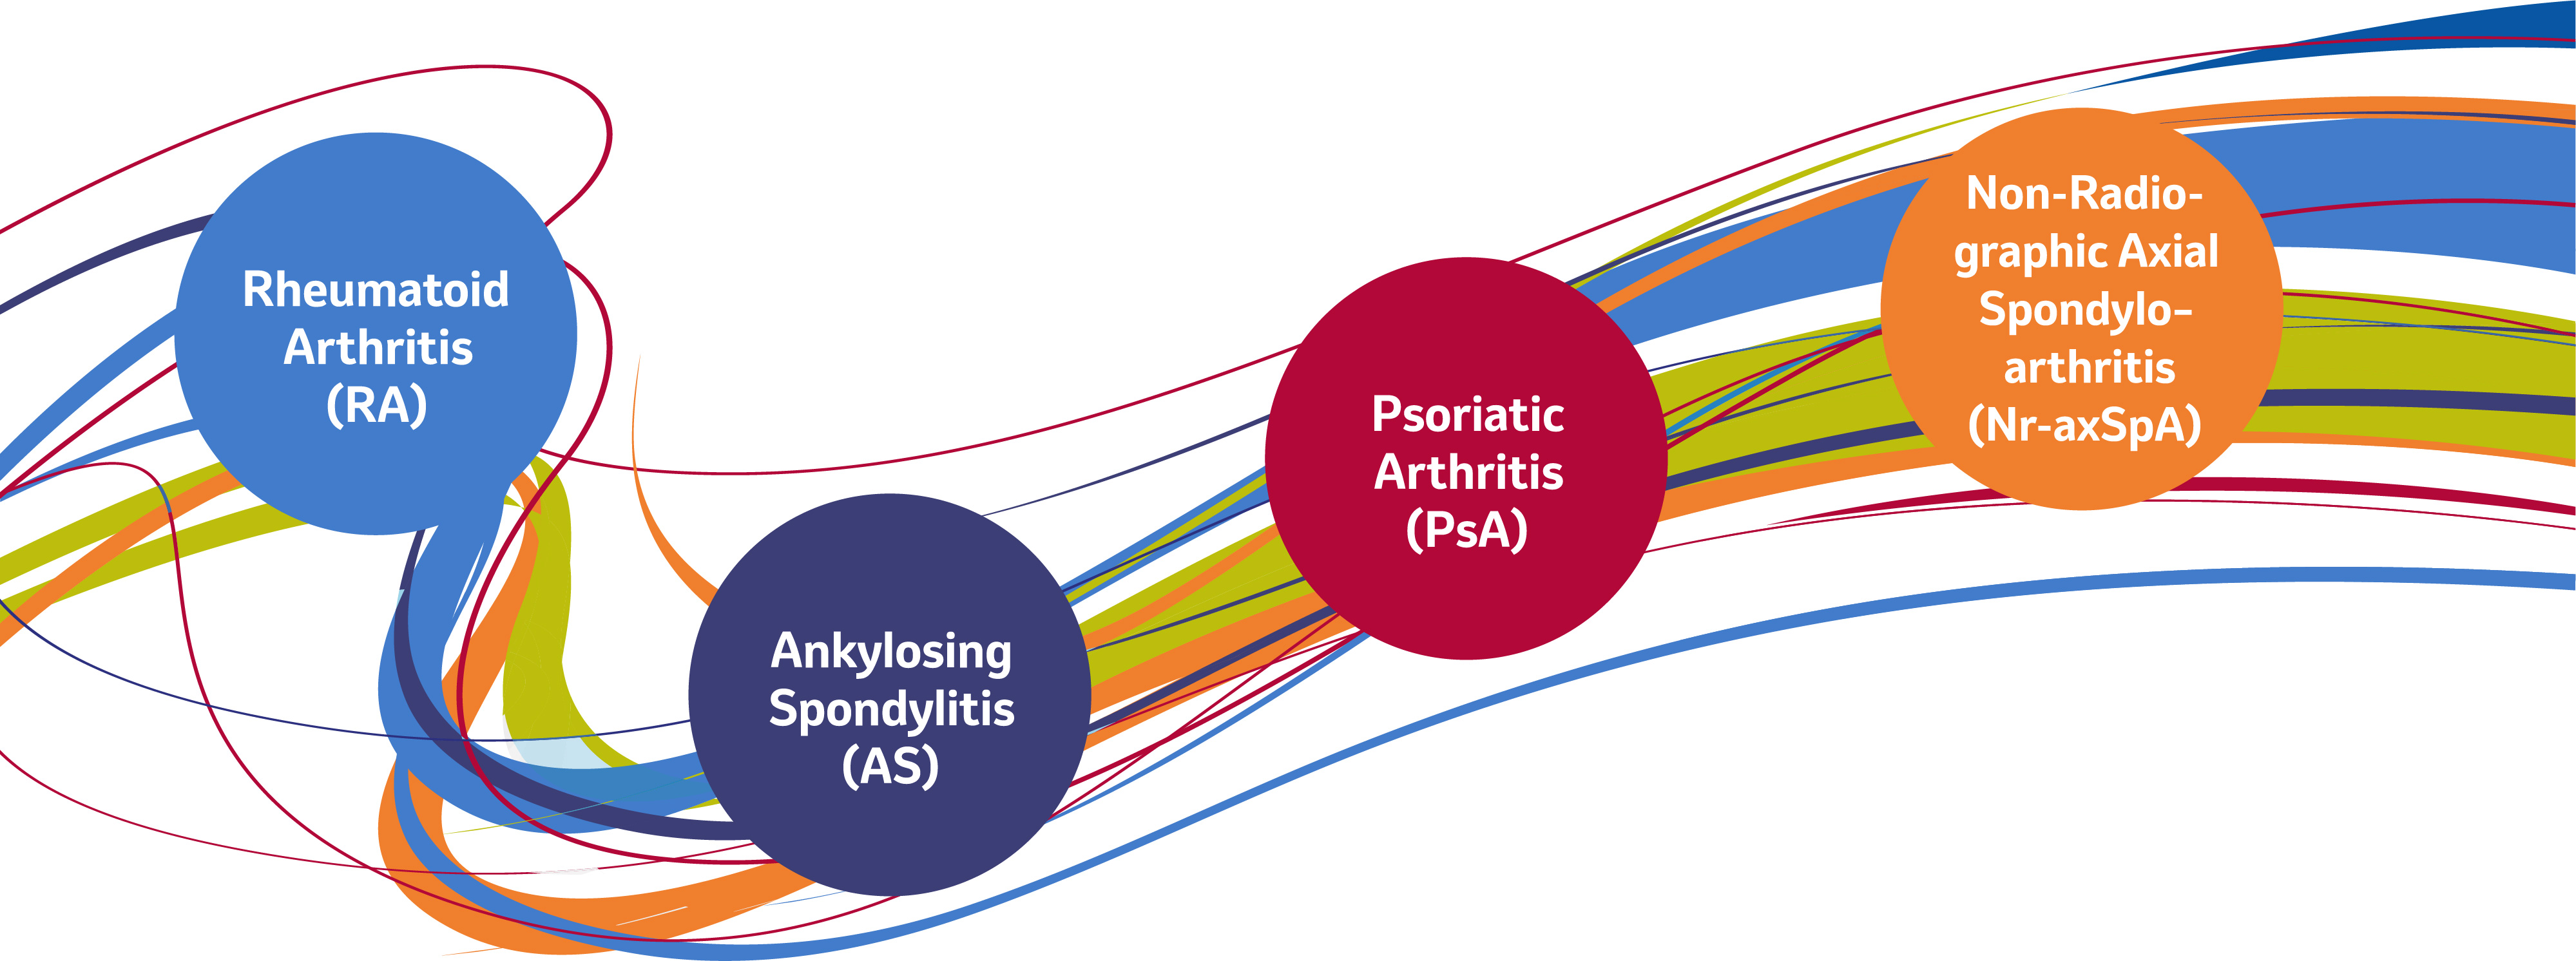 Indicated in Rheumatoid Arthritis (AS), Ankylosing Spondylitis (AS), Psoriatic Arthritis (PsA) and Non-Radiographic Axial Spondyloarthritis (Nr-axSpA)